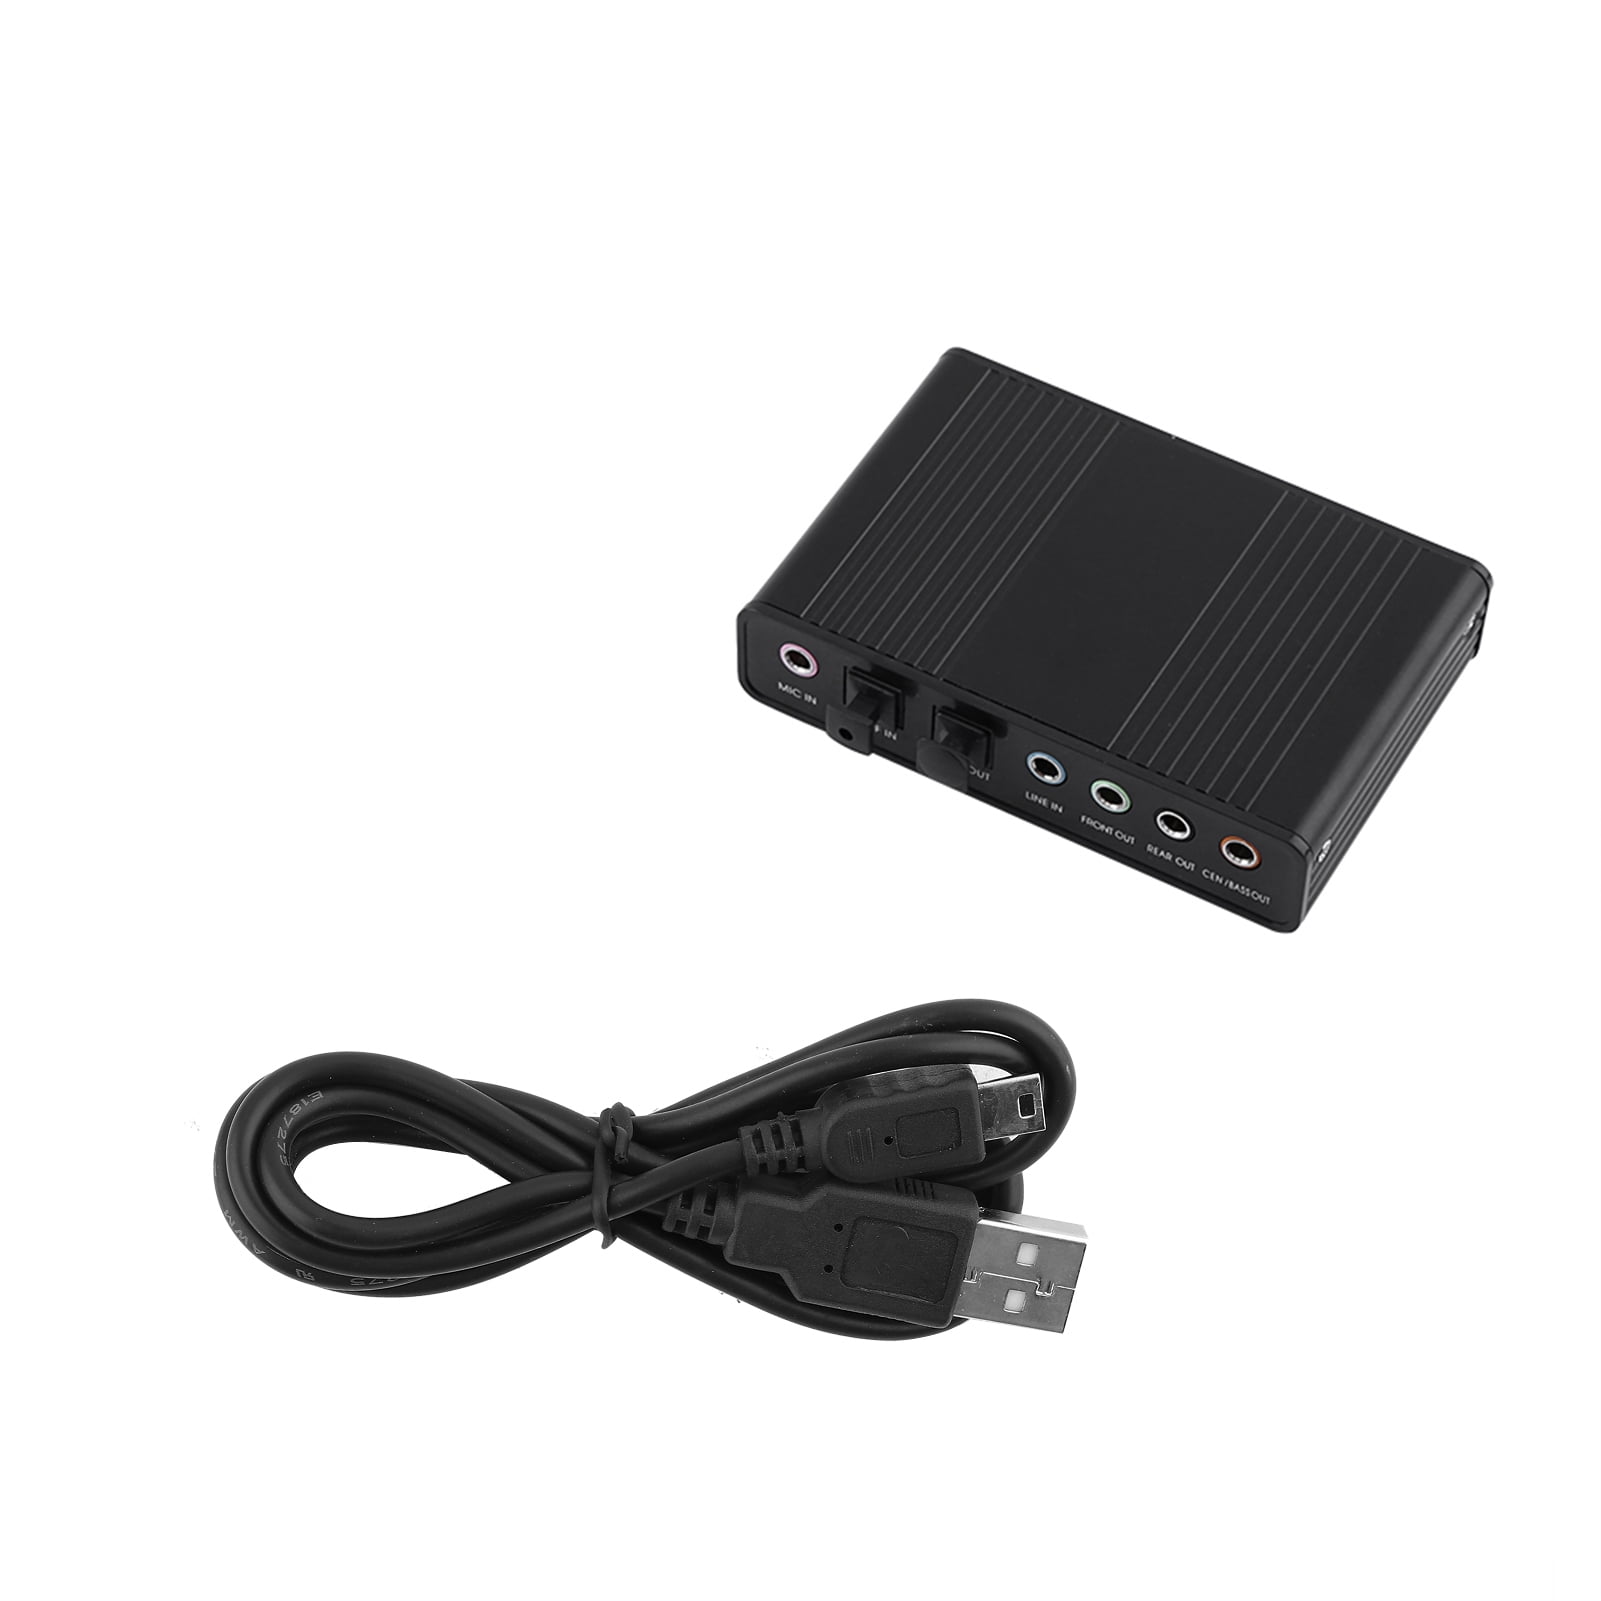 YOUTHINK Usb Card, Audio Sound Card, USB External Digital USB Audio Sound Card 6 Channel Black Computers Laptops For PC Desktop -